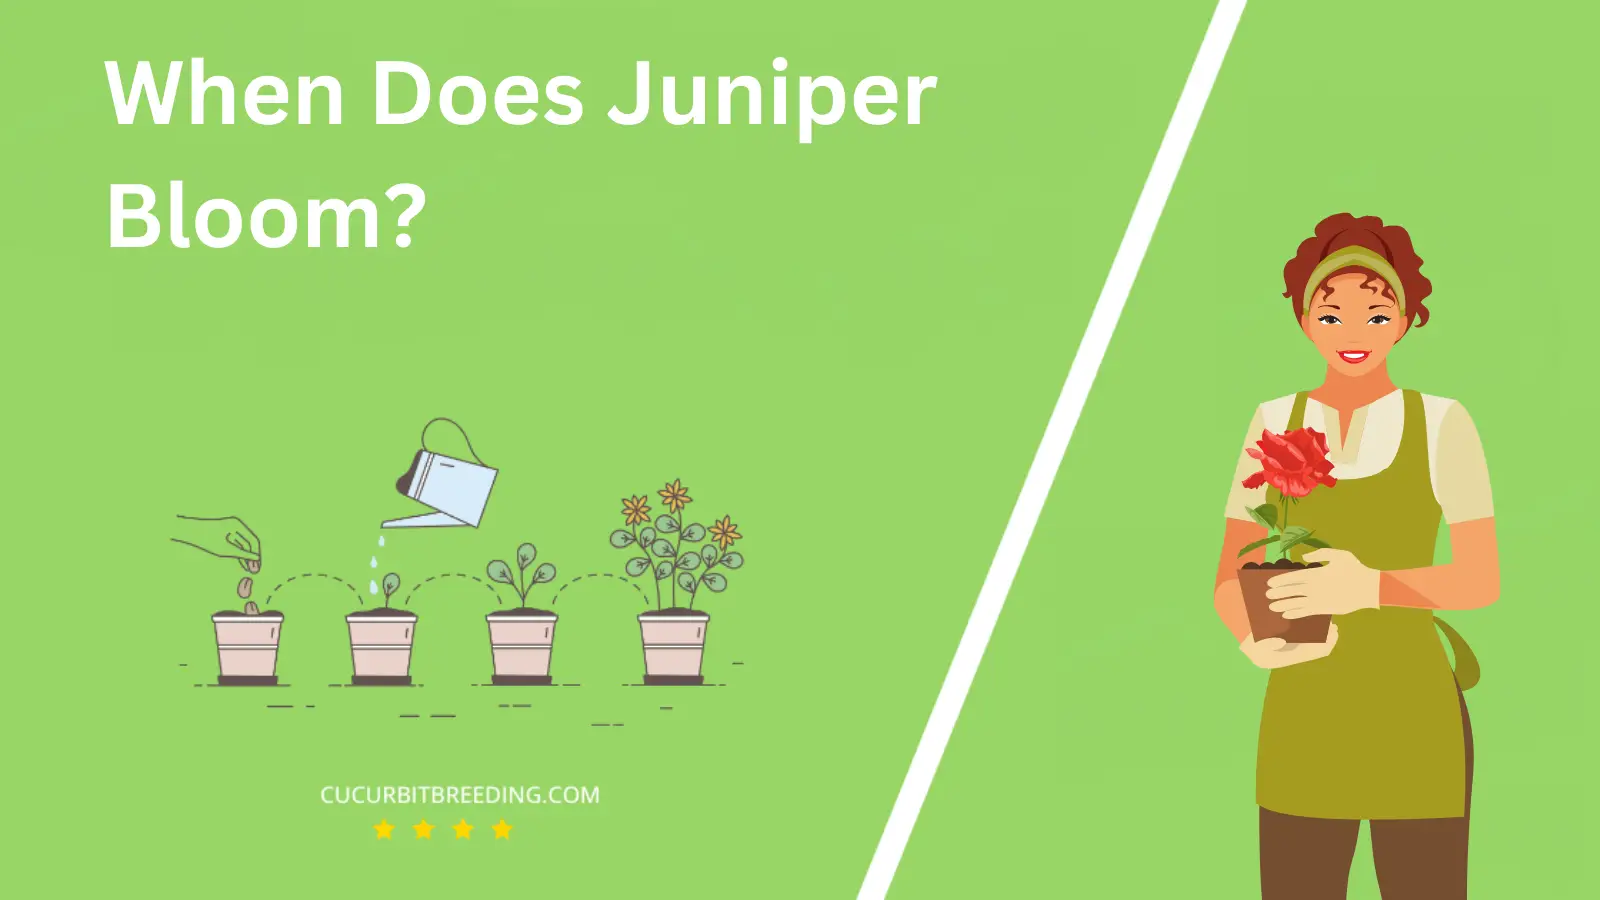 When Does Juniper Bloom?